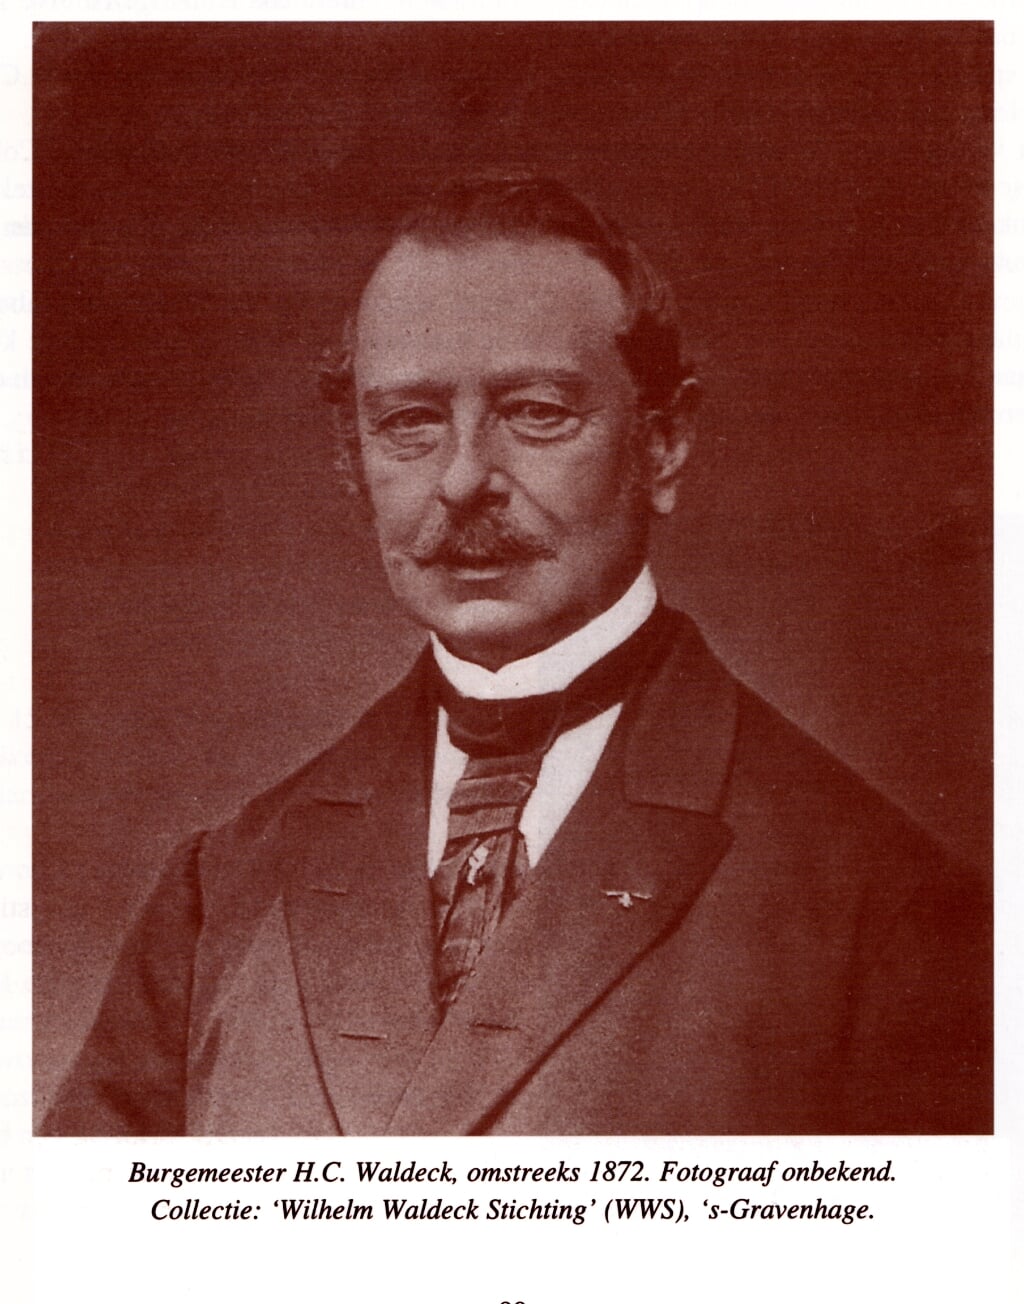 Burgemeester H.C. Waldeck omstreeks 1872.